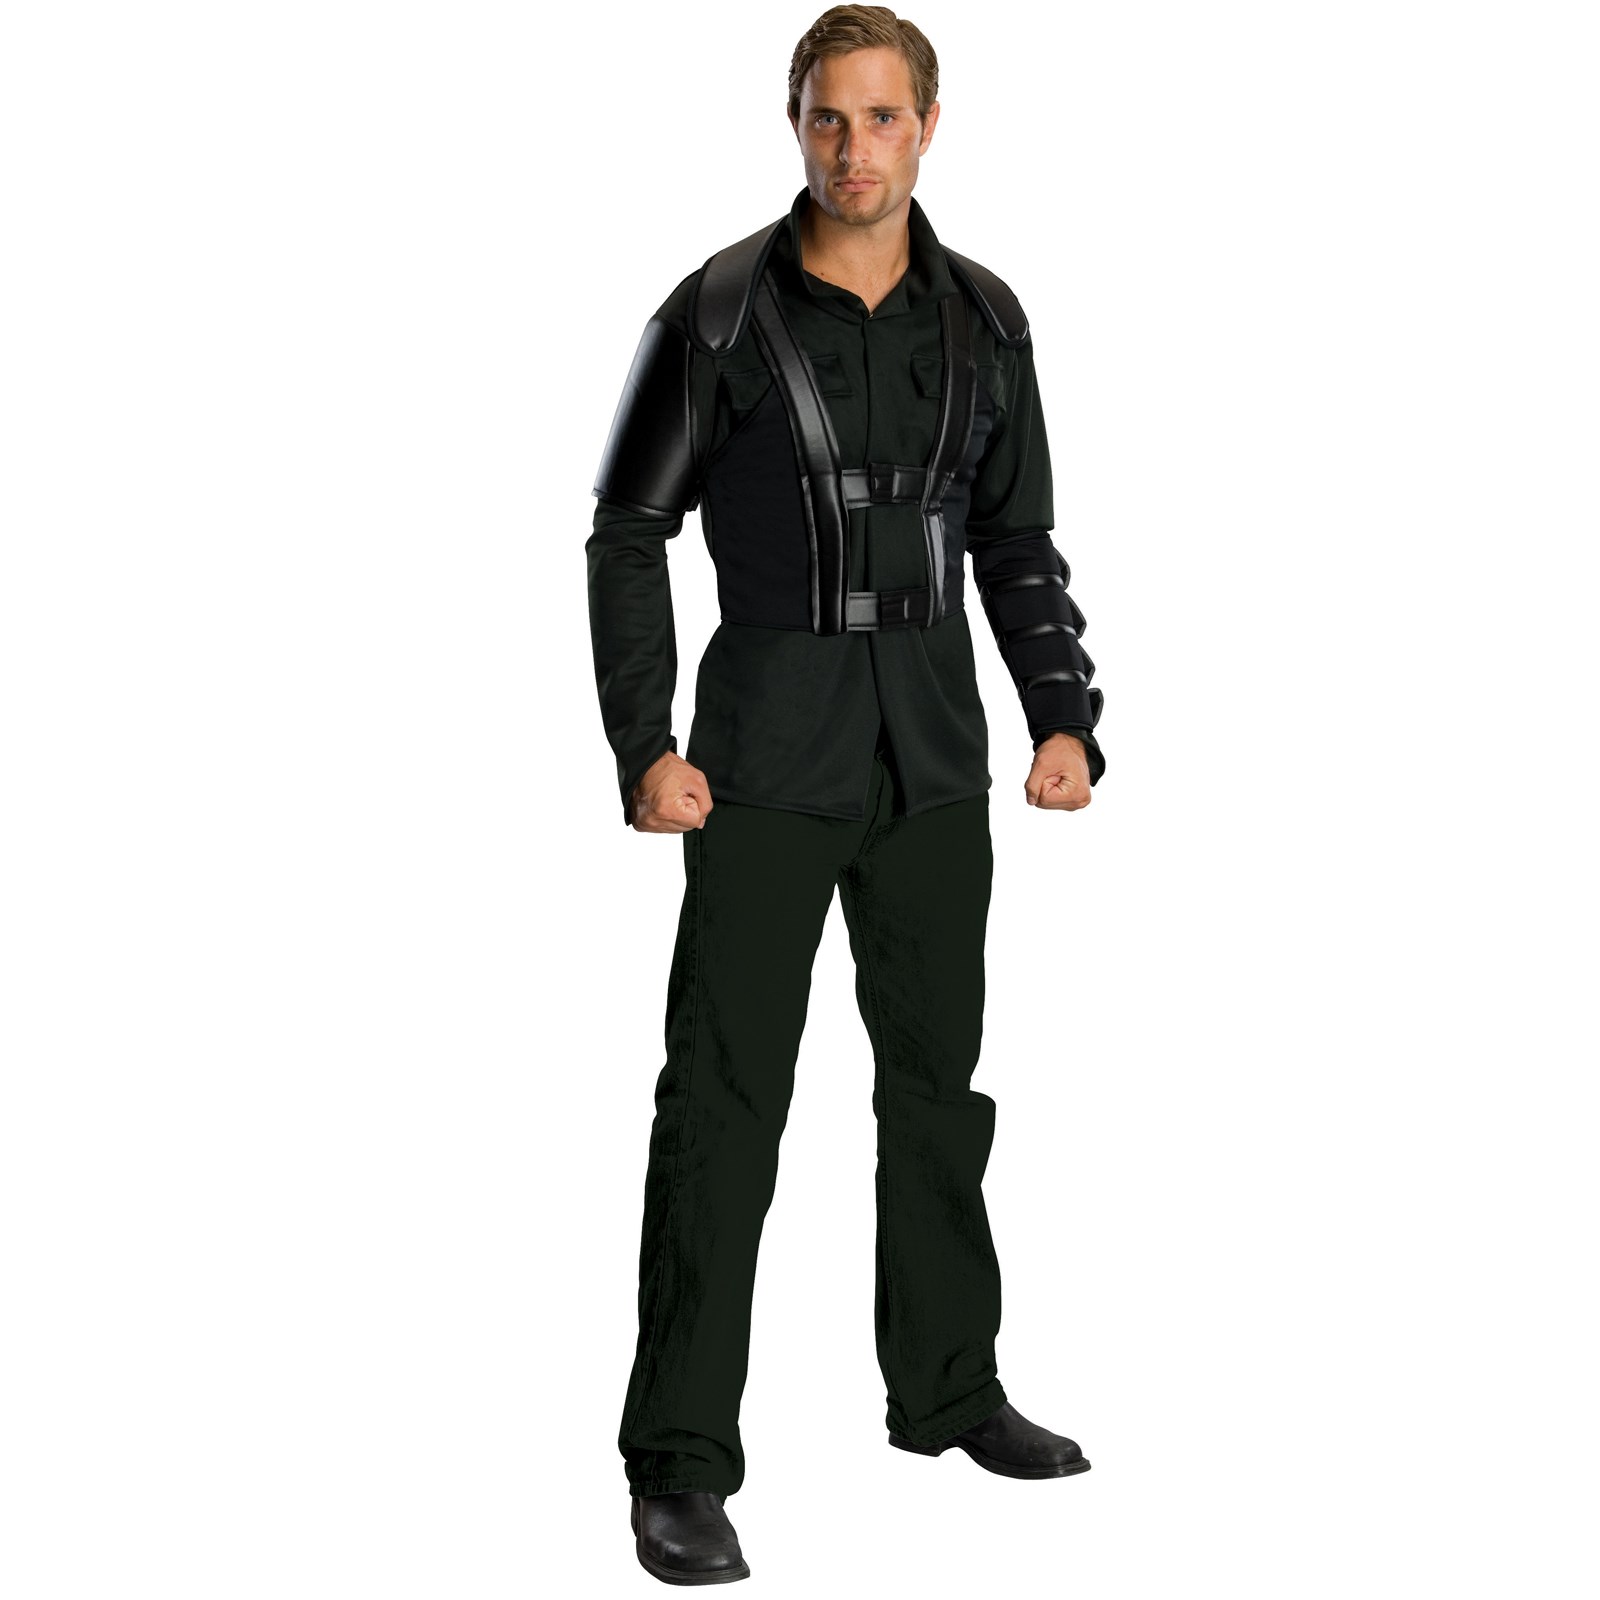 Terminator 4 John Connor Deluxe Adult Costume